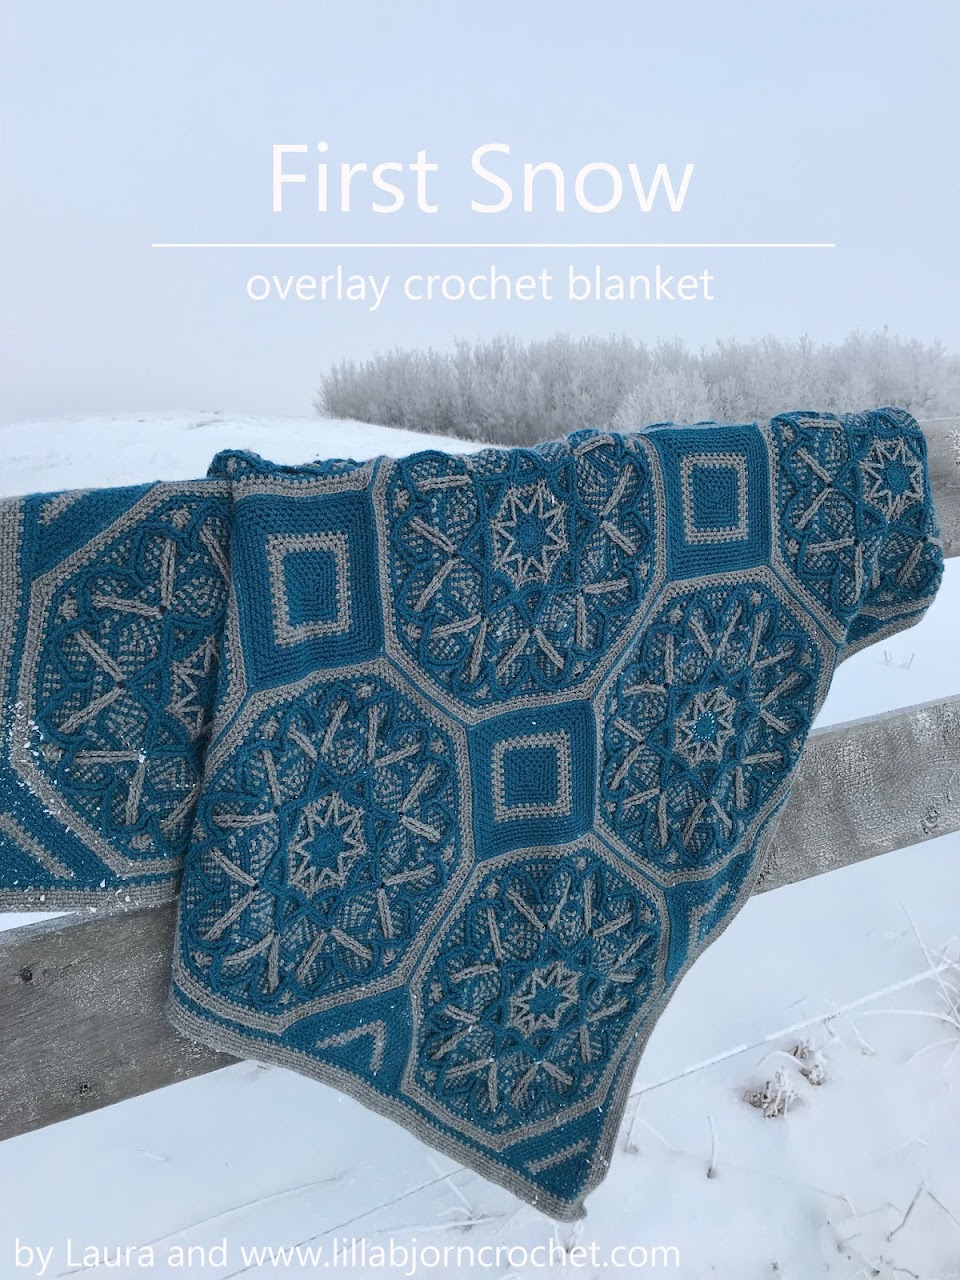 First Snow overlay crochet blanket - pattern on www.lillabjorncrochet.com